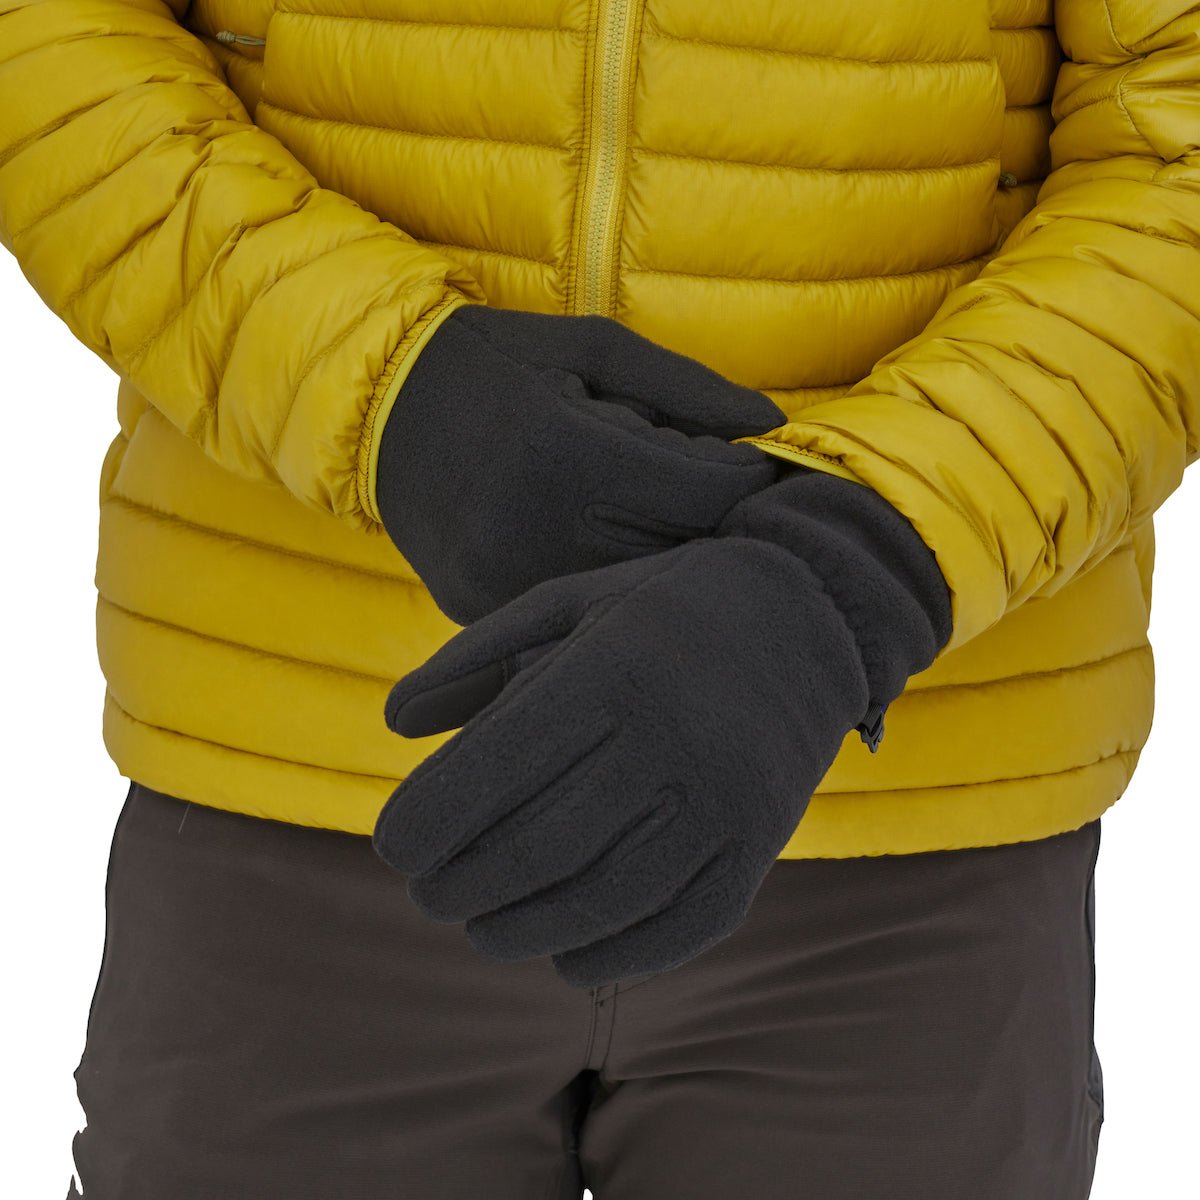 Patagonia – Handschuhe SYNCHILLA® FLEECE GLOVES Black - WILDHOOD store